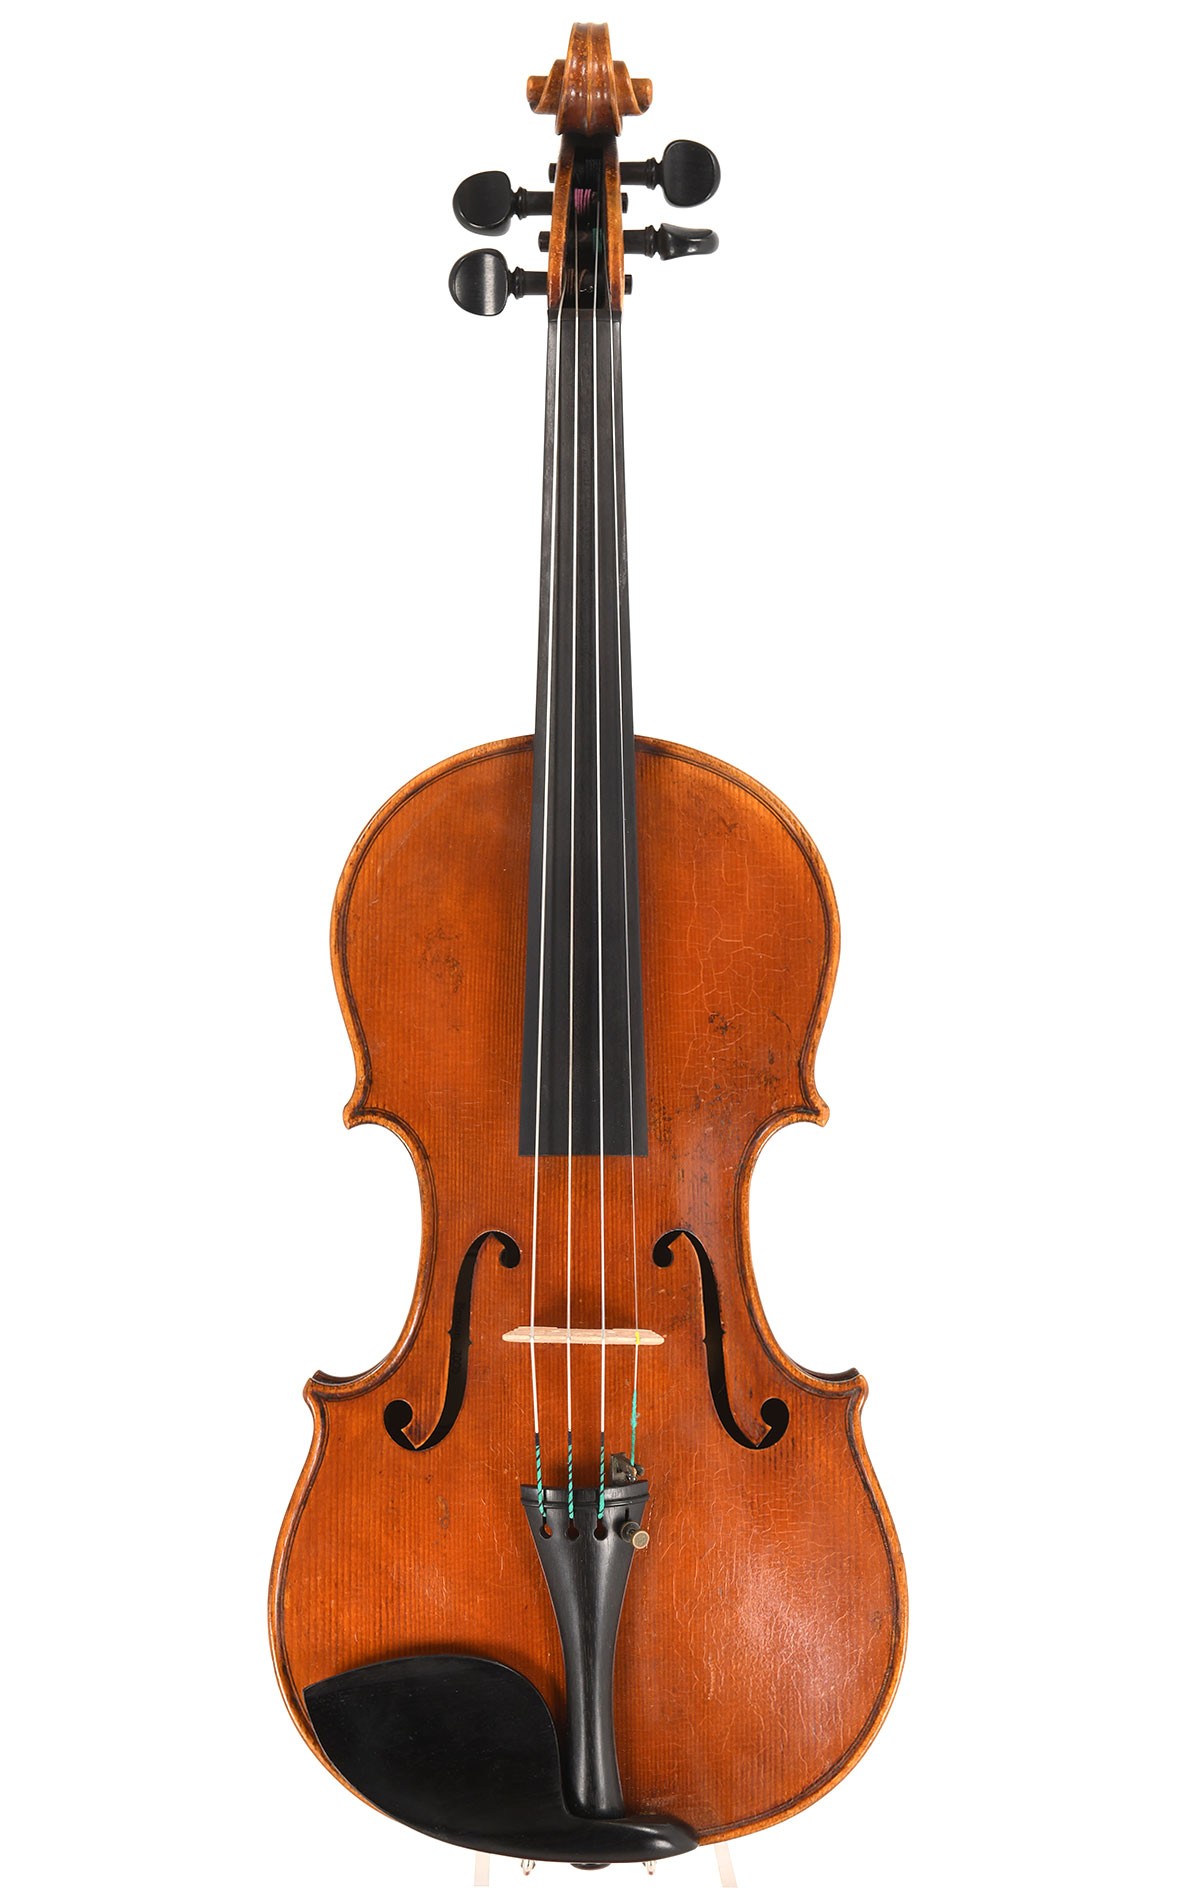 Contemporary professional violin